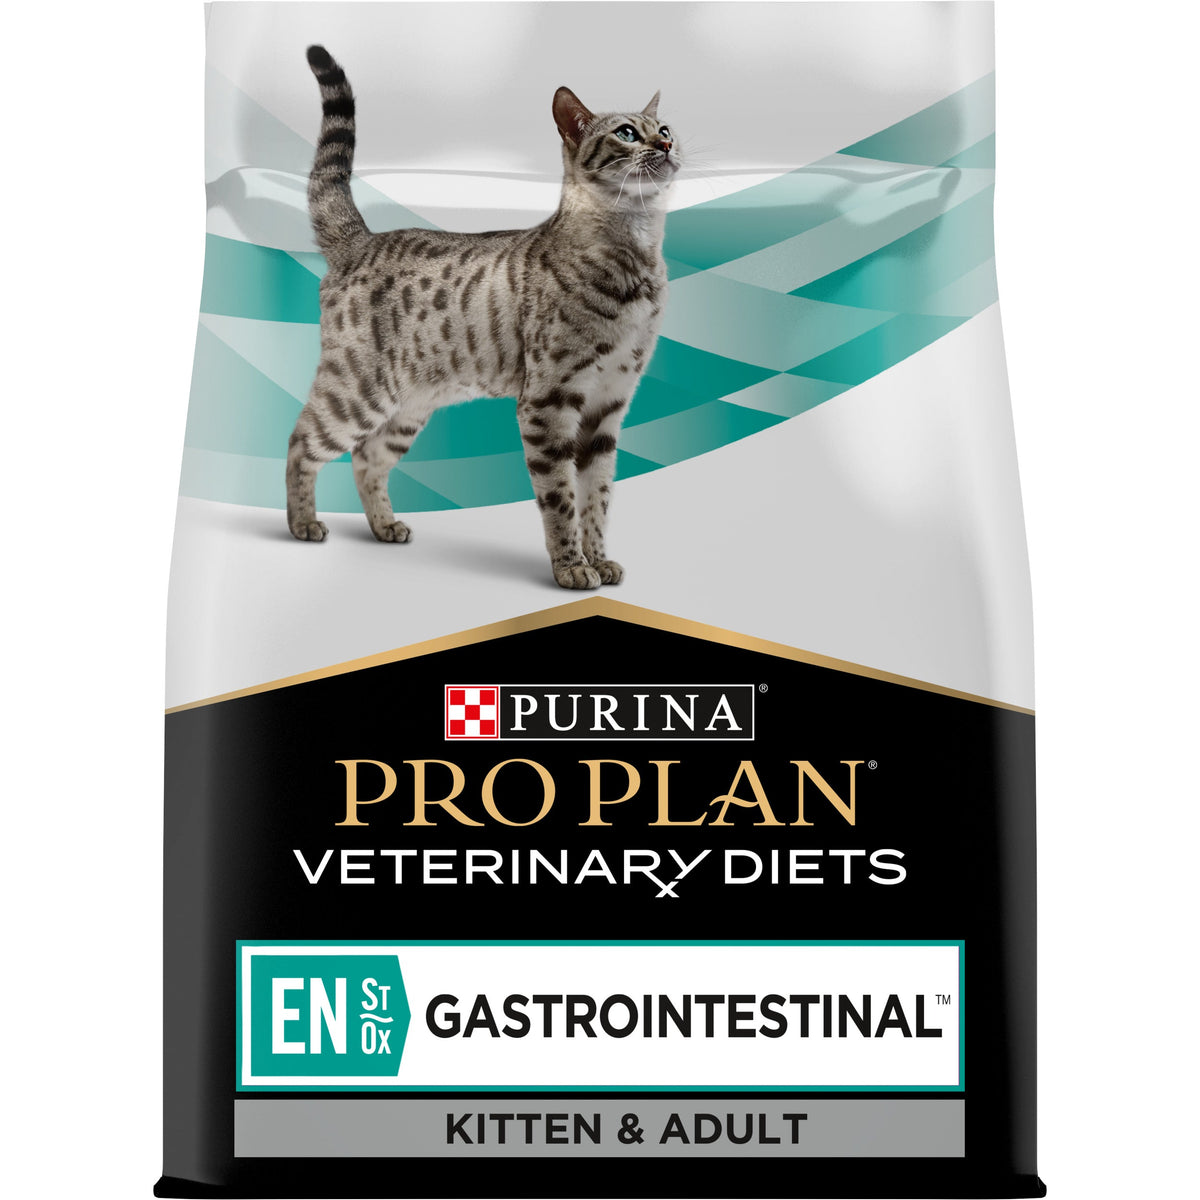 PURINA® PRO PLAN® Veterinary Diets - EN ST/OX Gastrointestinal kissanruoka.